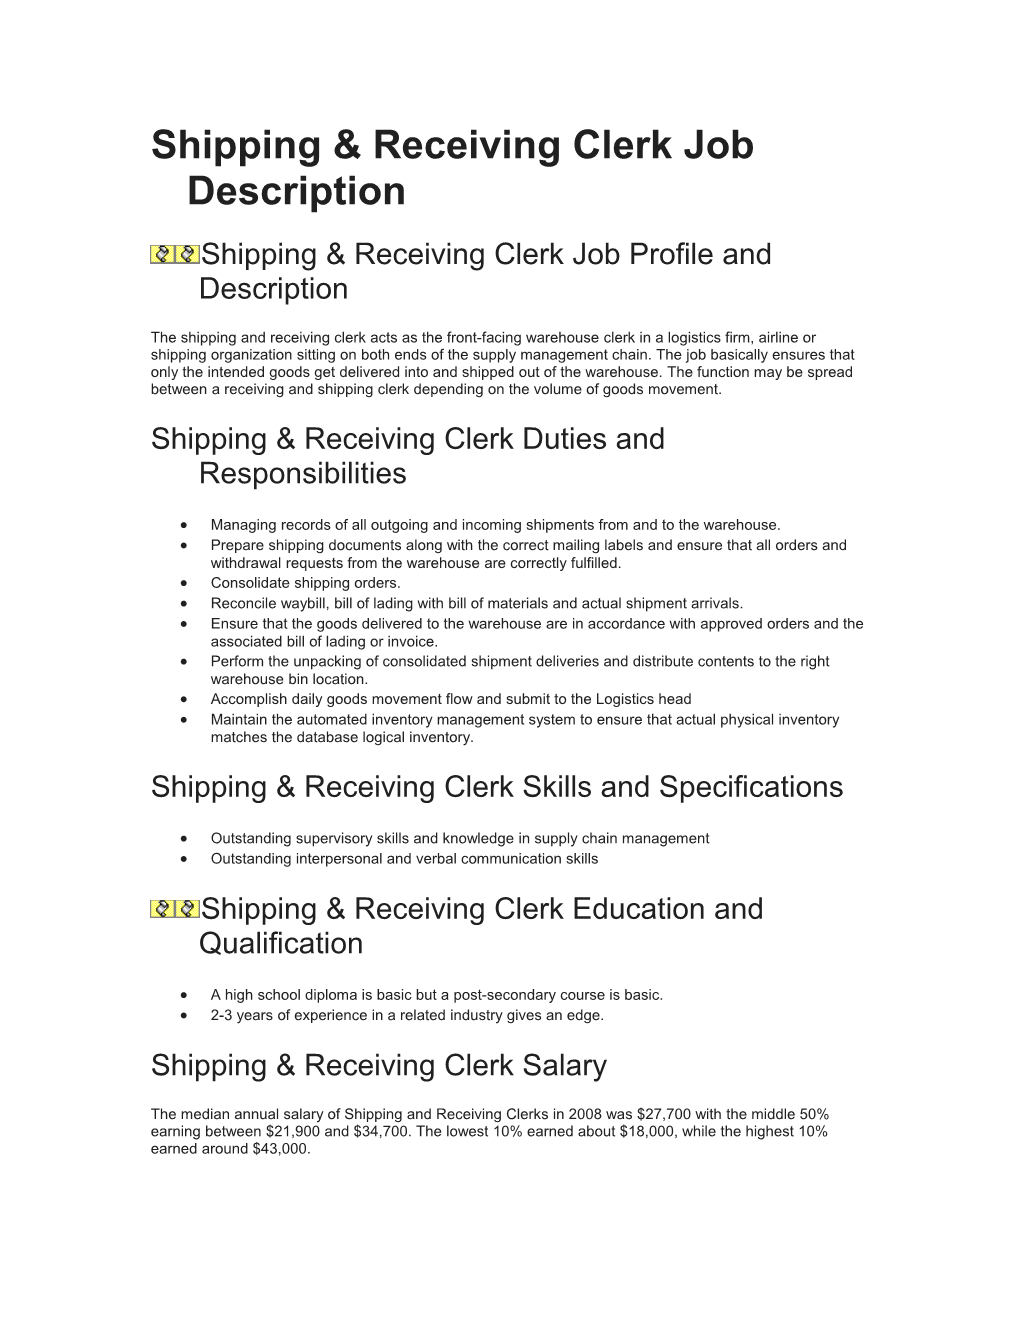 Shipping & Receiving Clerk Job Description